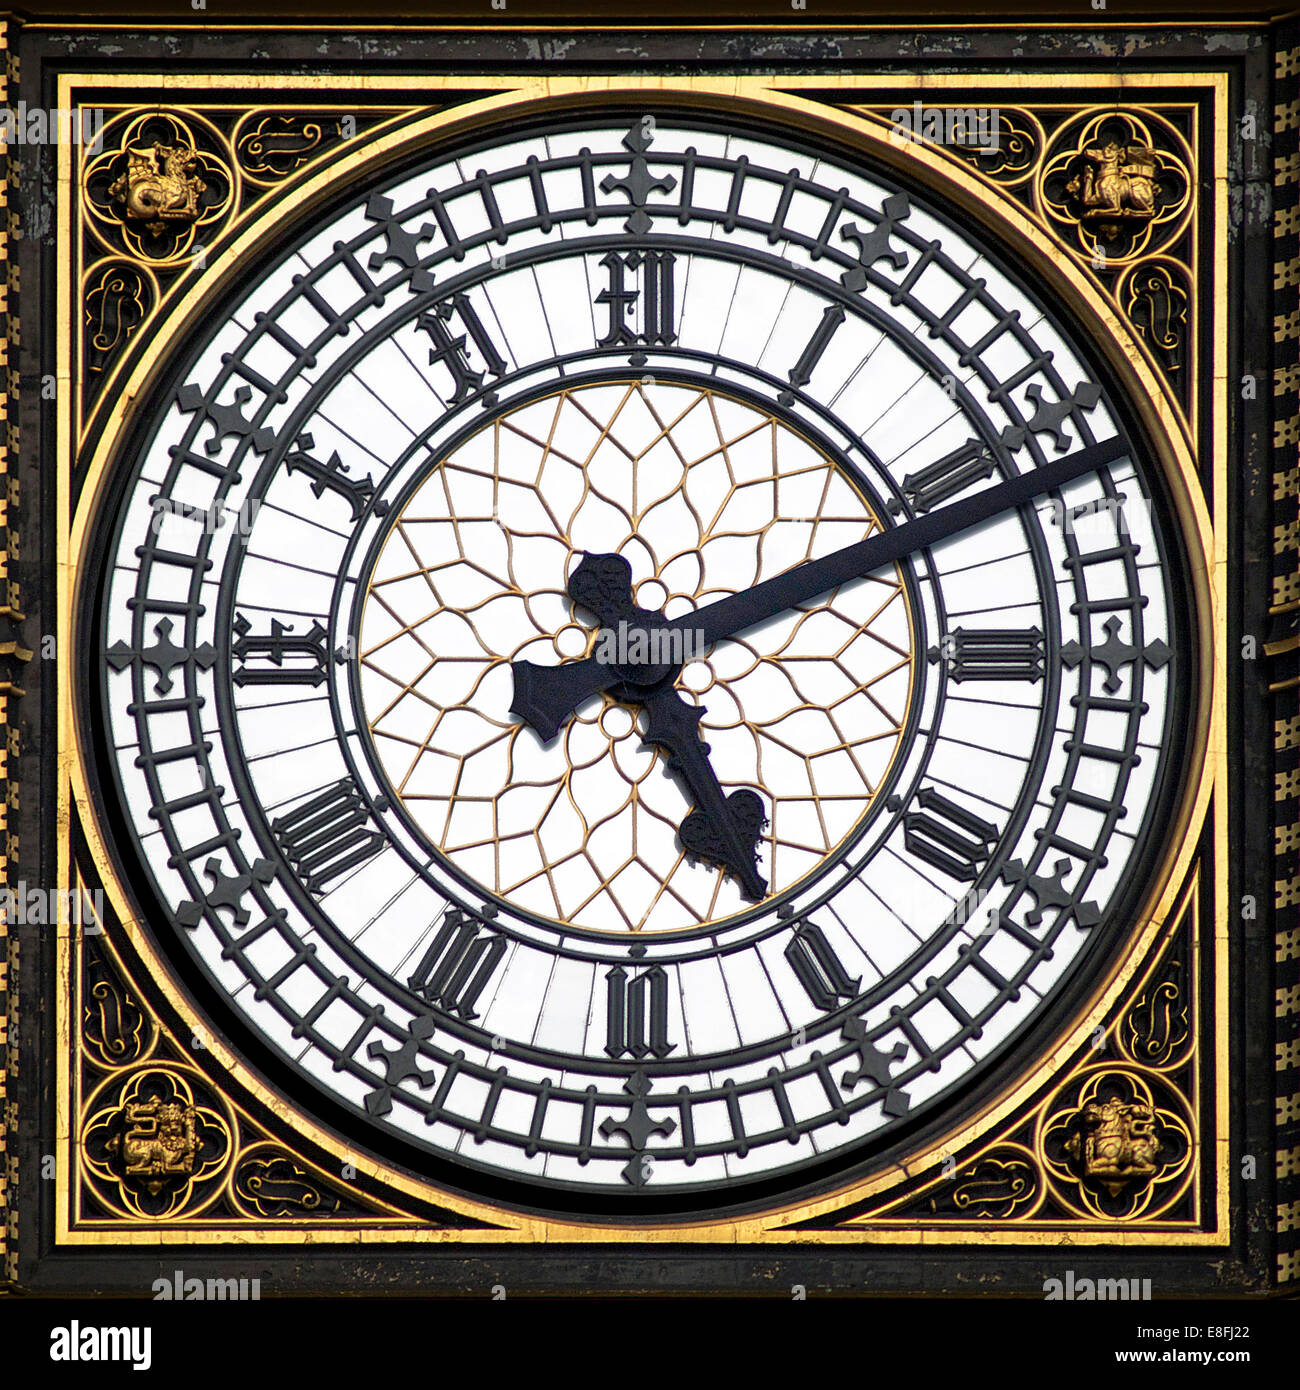 Big Ben clock face, London, England, United Kingdom Stock Photo